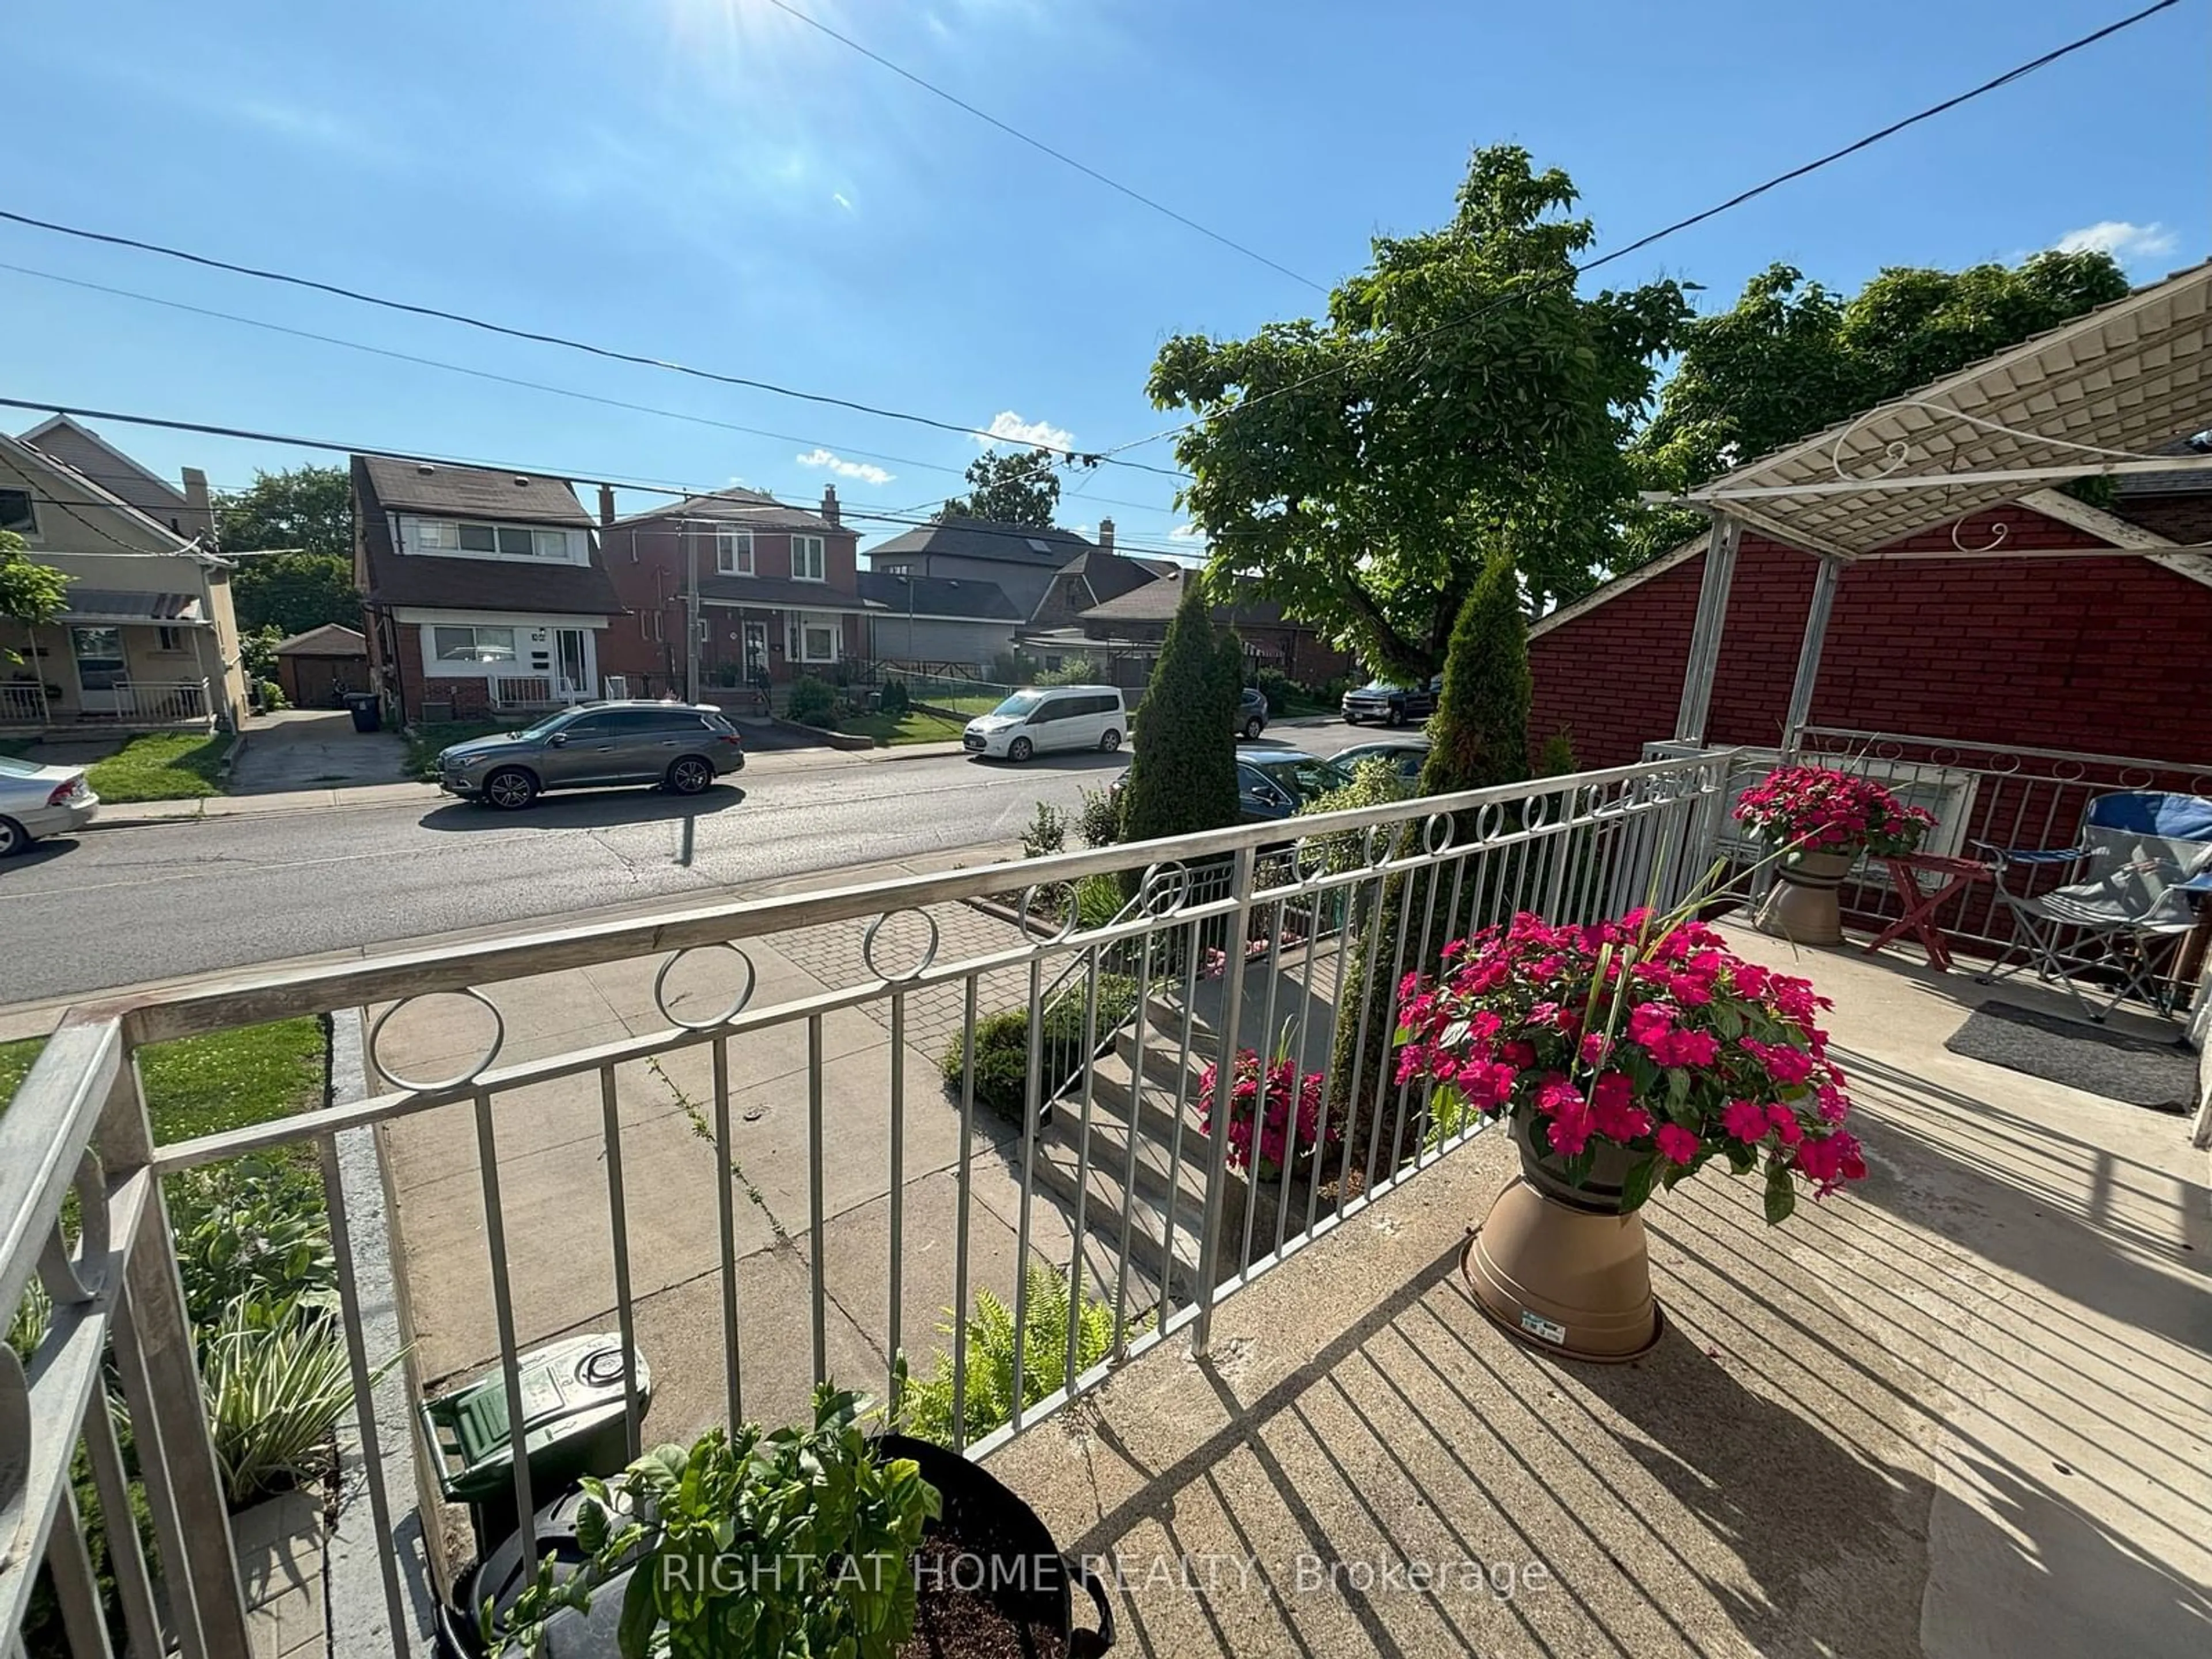 Street view for 35 Ronald Ave, Toronto Ontario M6E 4M5